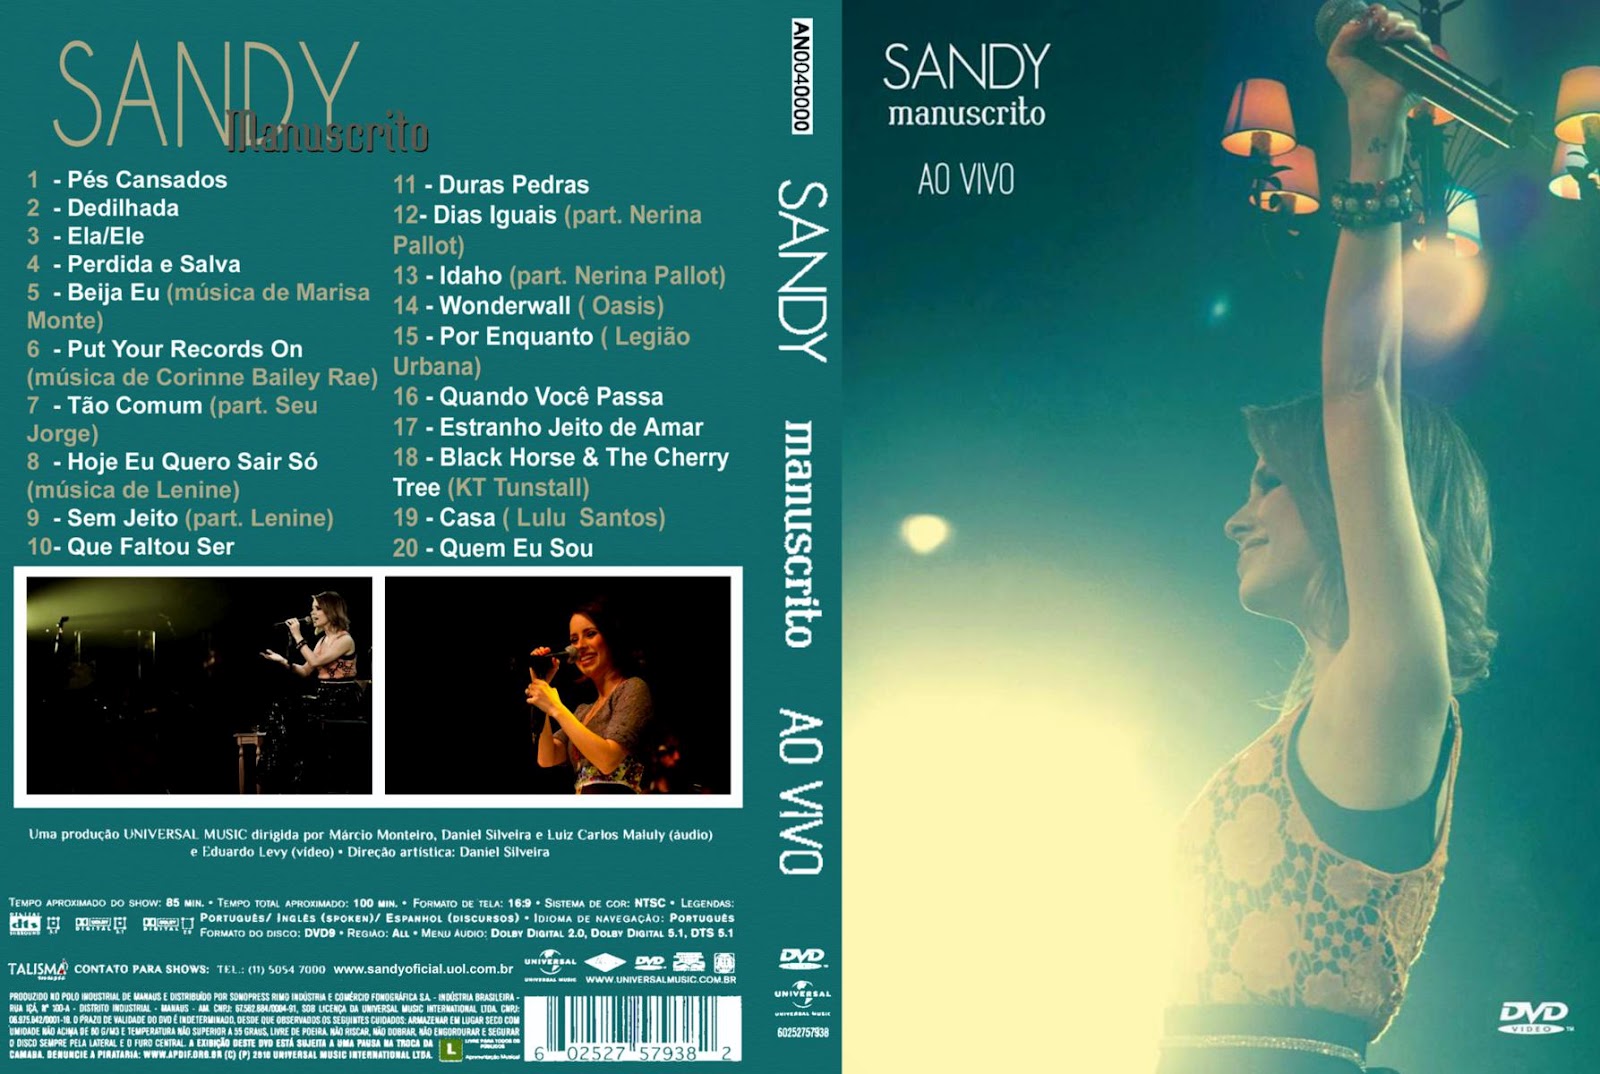 Sandy Leah - Manuscrito ao vivo